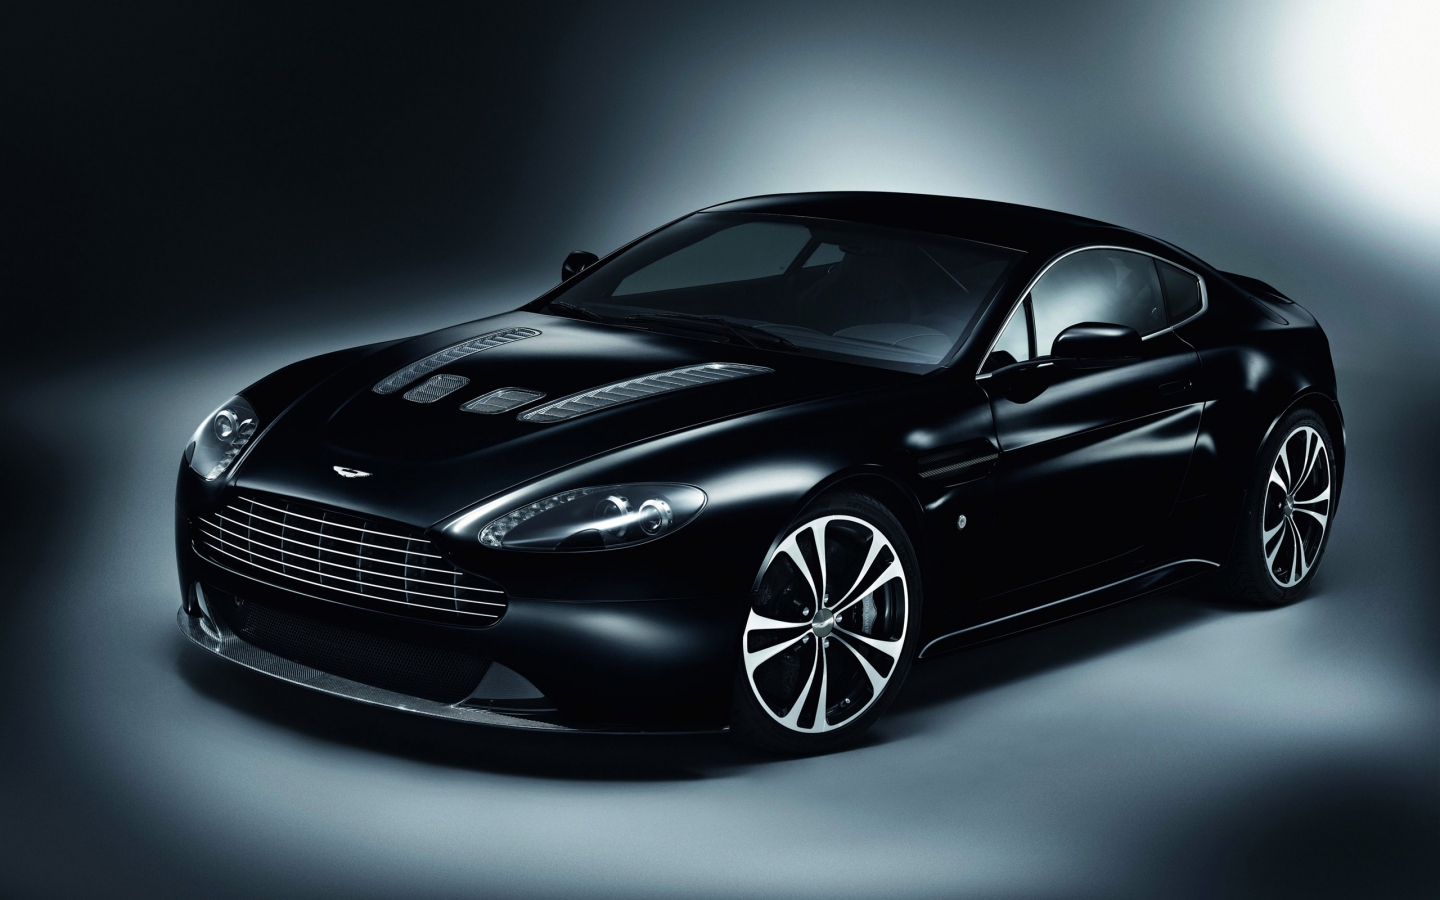 Aston Martin V12 Vantage Carbon Black for 1440 x 900 widescreen resolution